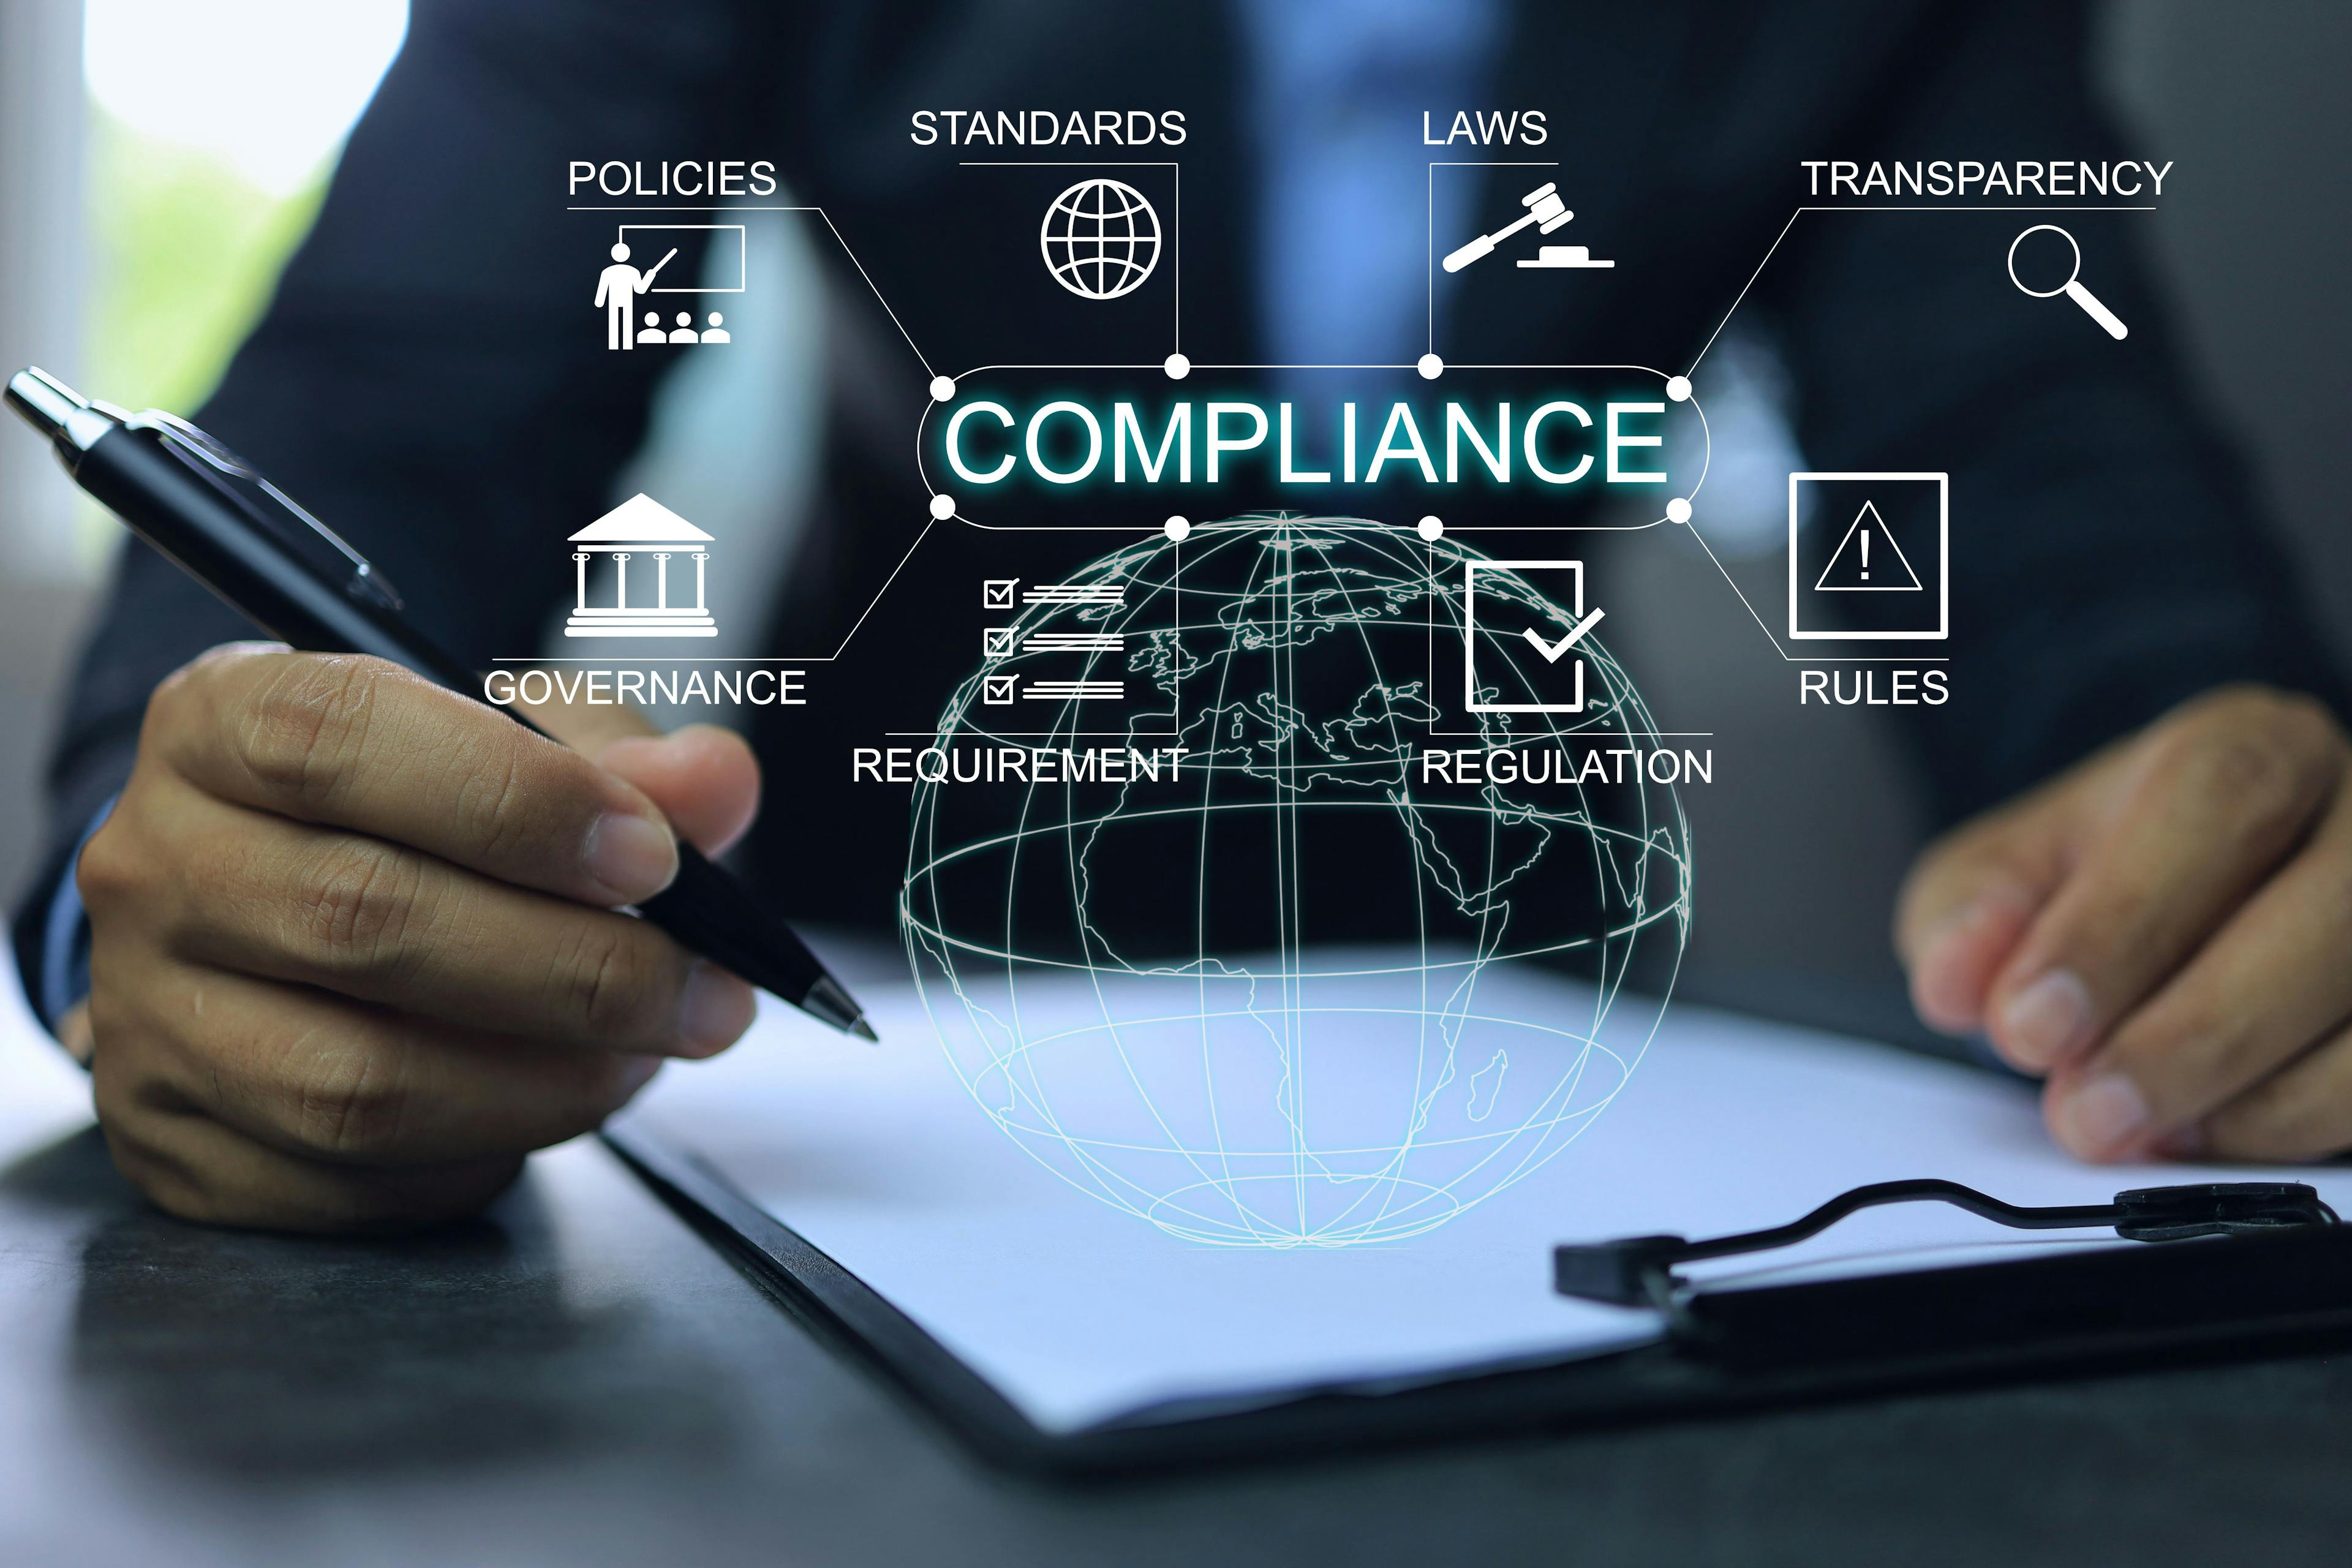 Cybersecurity regulatory compliance: ©Arlee - stock.adobe.com